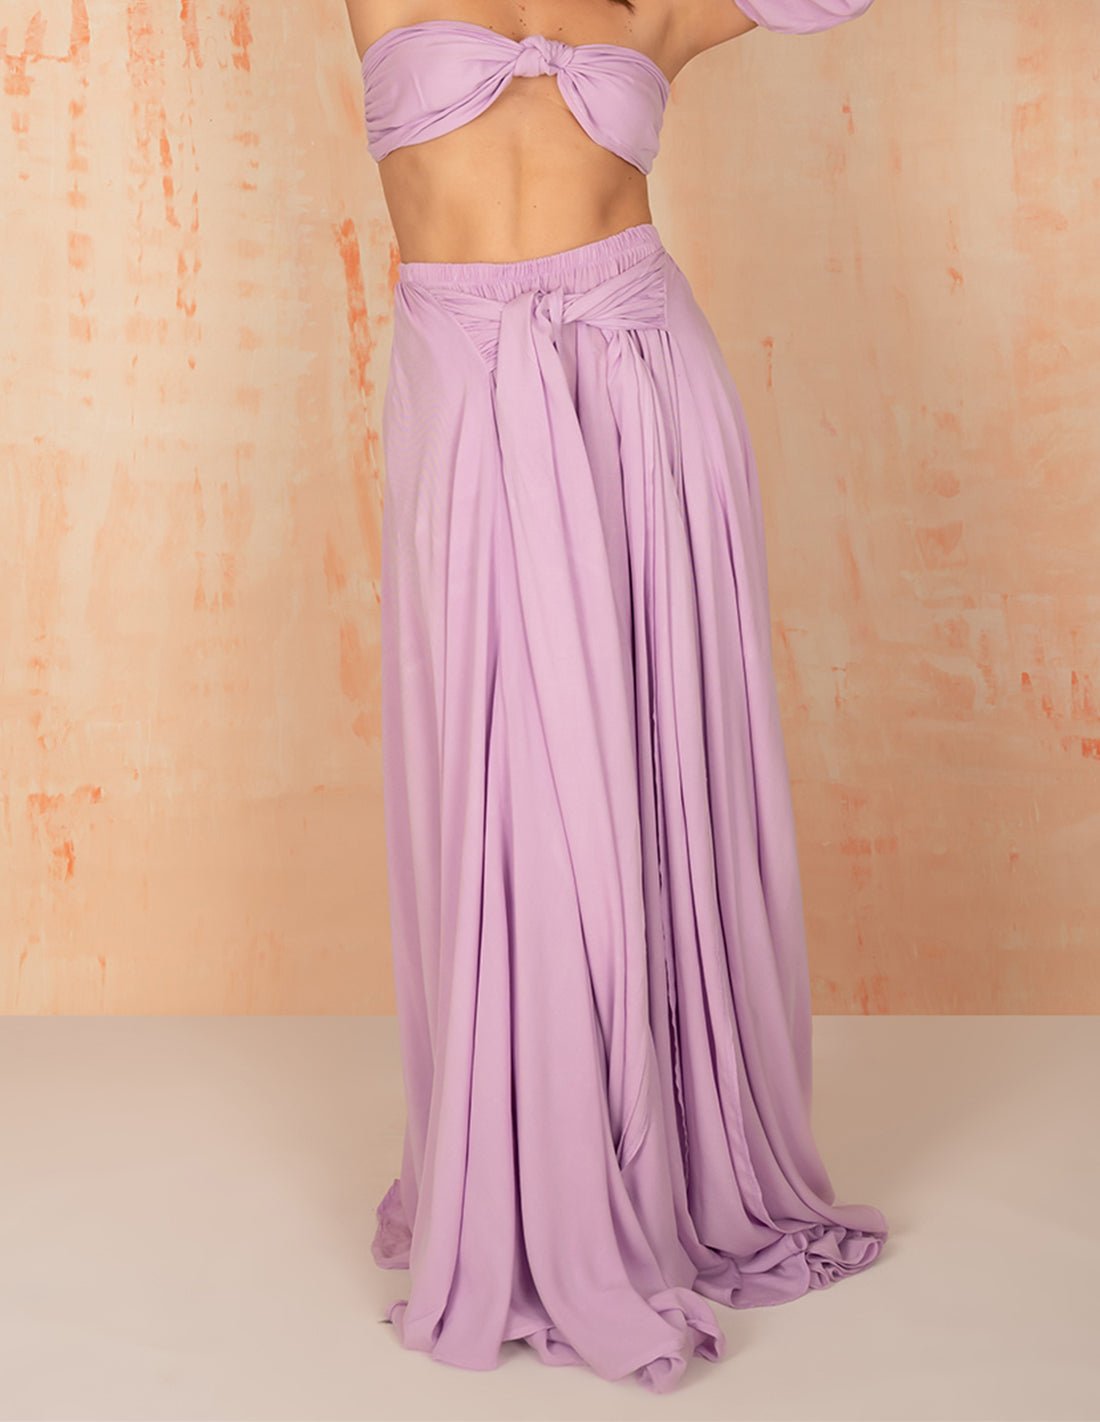 Waterfall Skirt Mind Purple - Skirt - Entreaguas Wearable Art